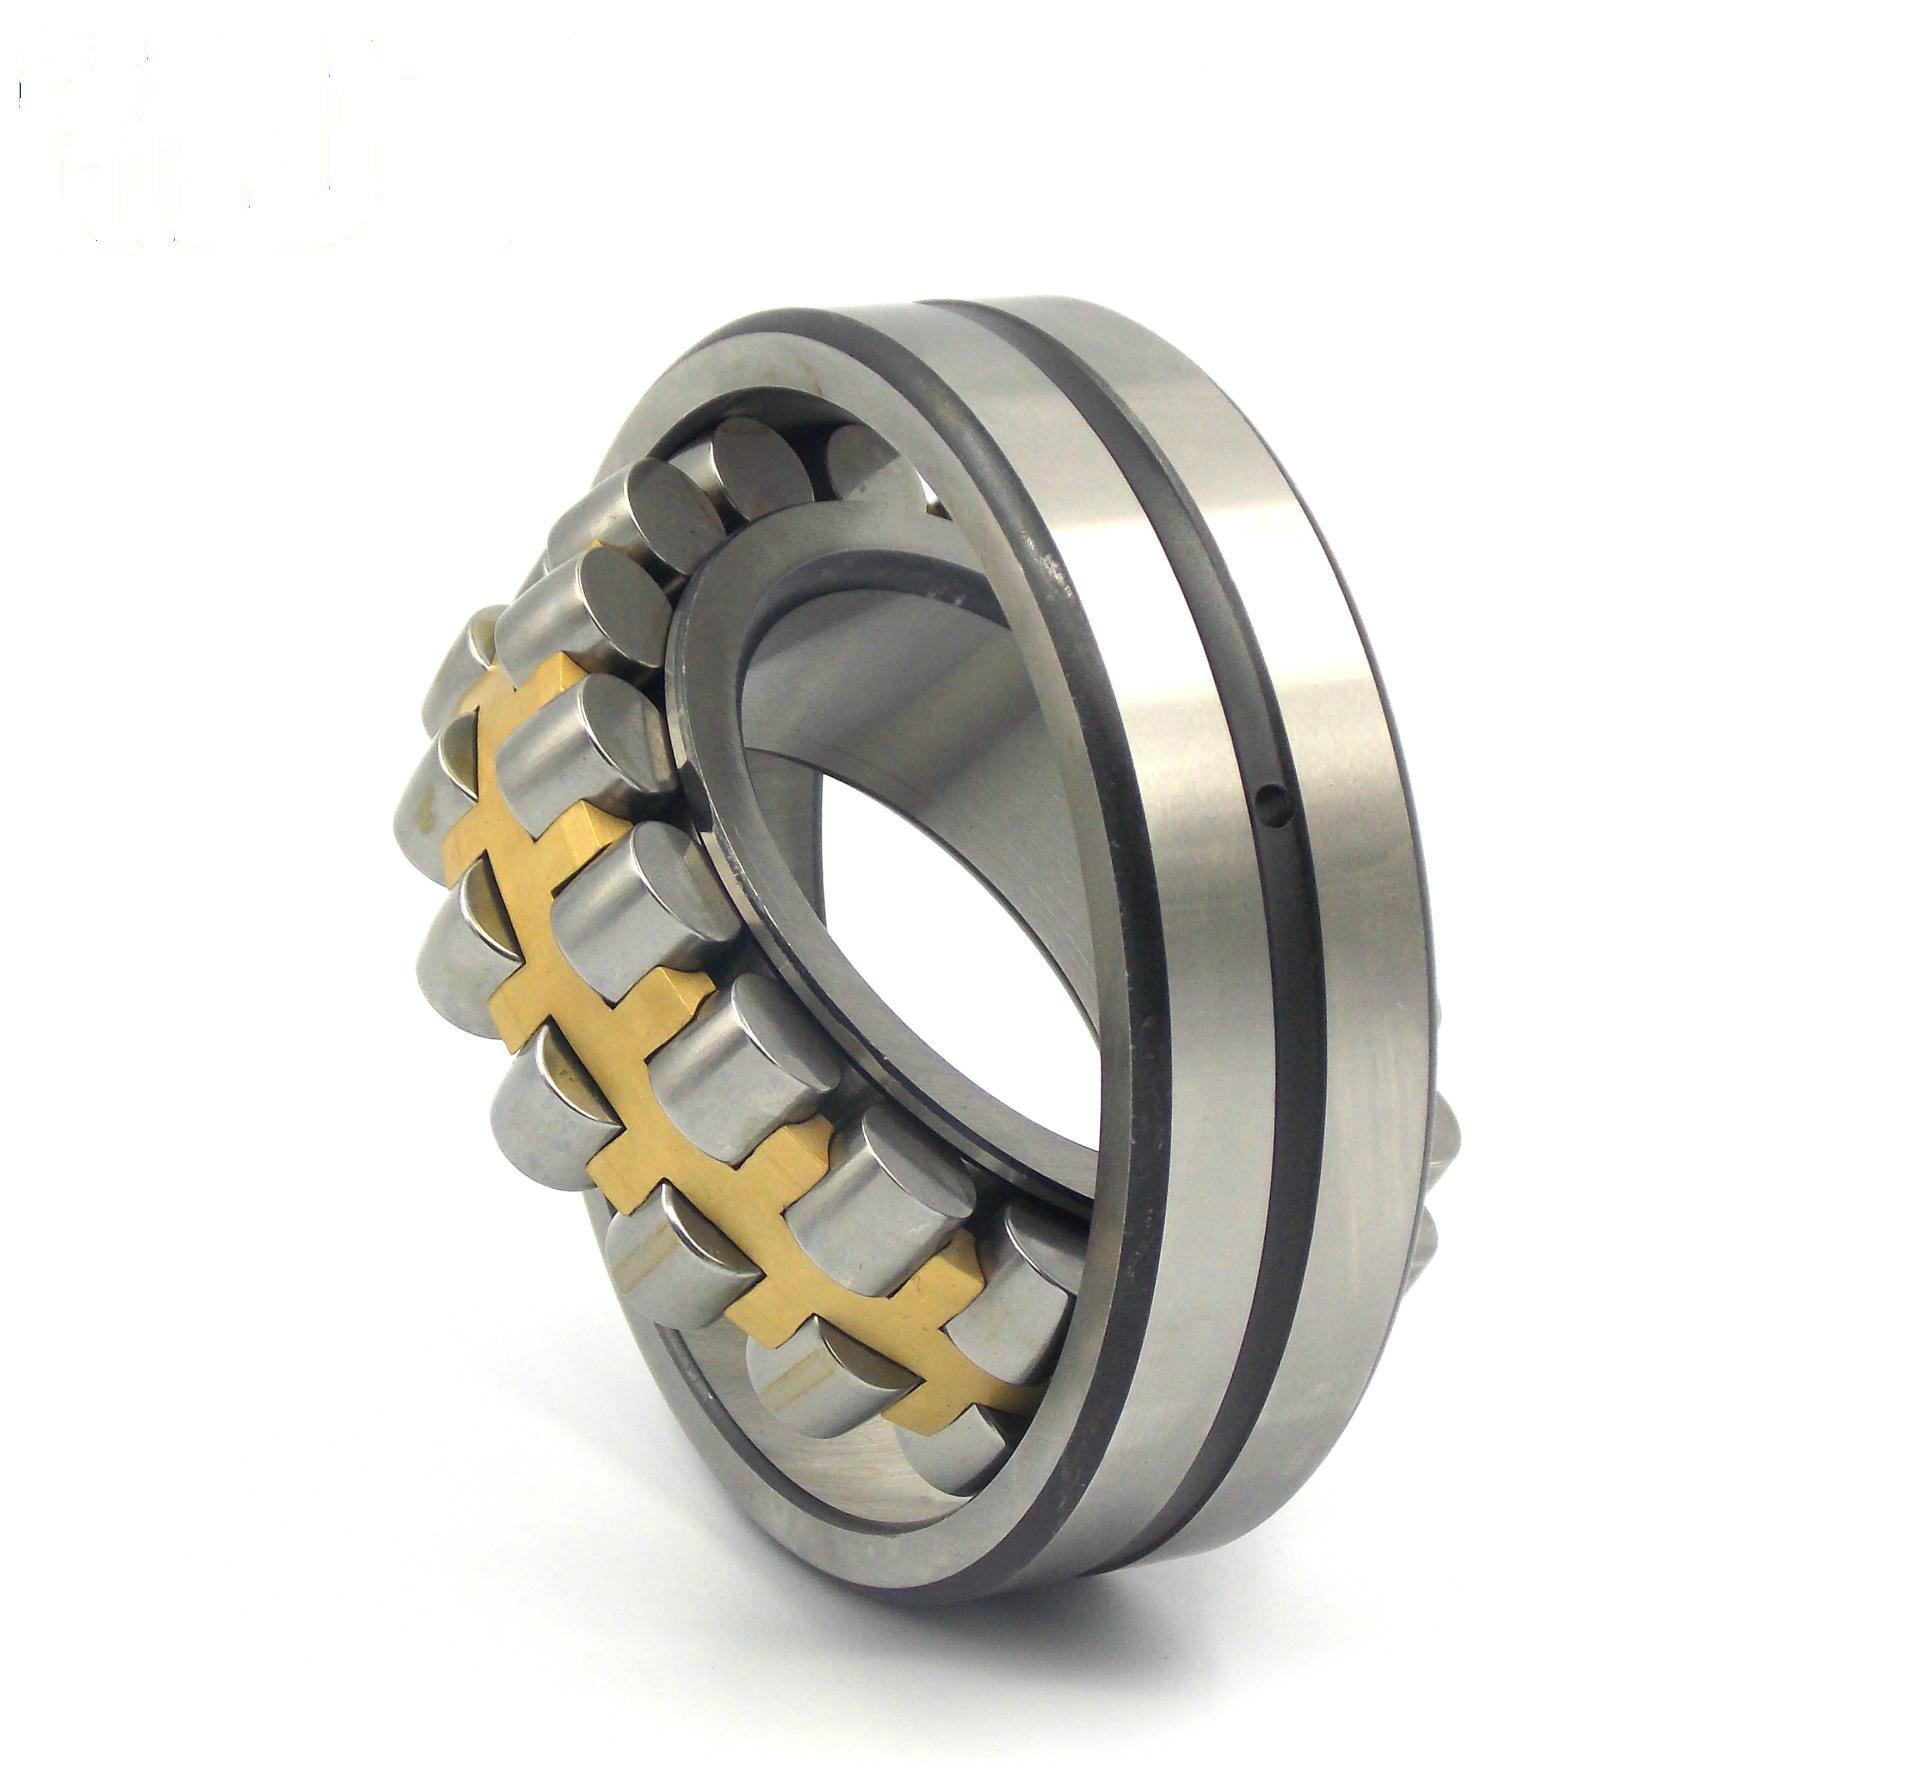  NJ 2320 M Cylindrical roller bearing